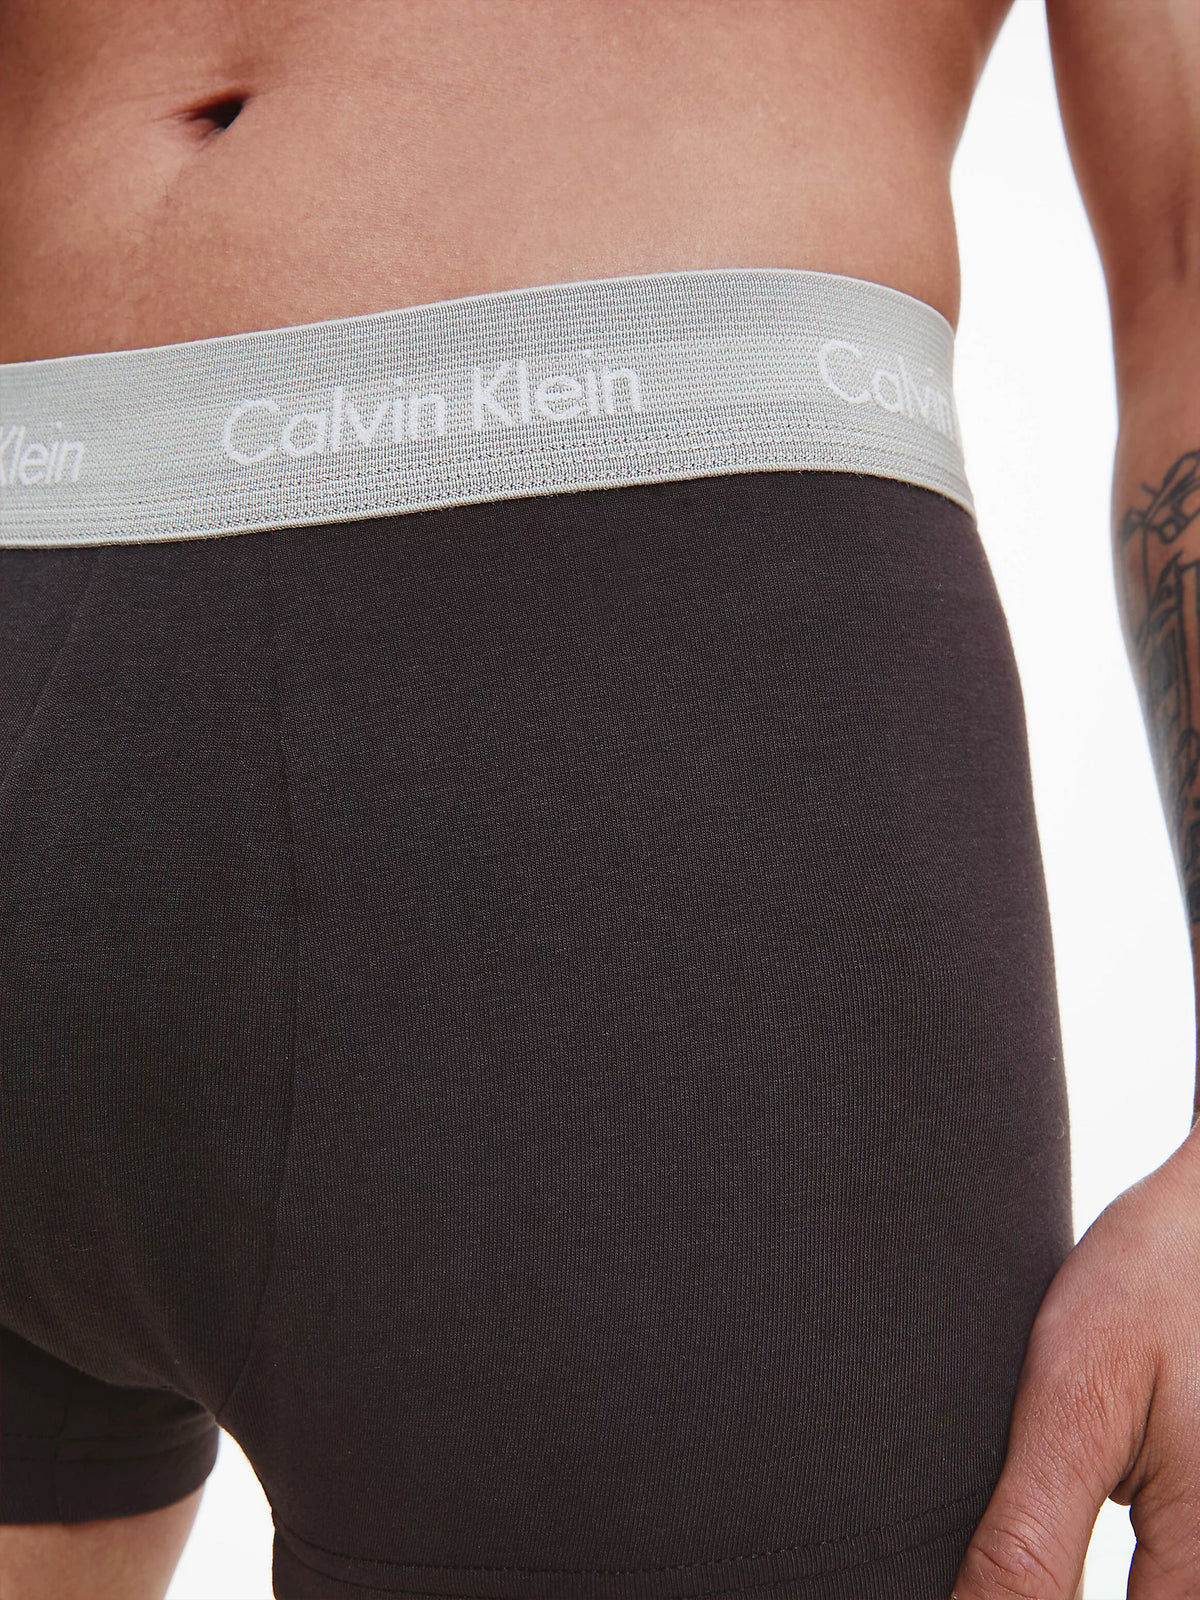 Mens Calvin Klein Boxer Shorts Low Rise Trunks 3 Pack, 04, U2664G, B-Shoreline/ Grey/ Travertine Wb